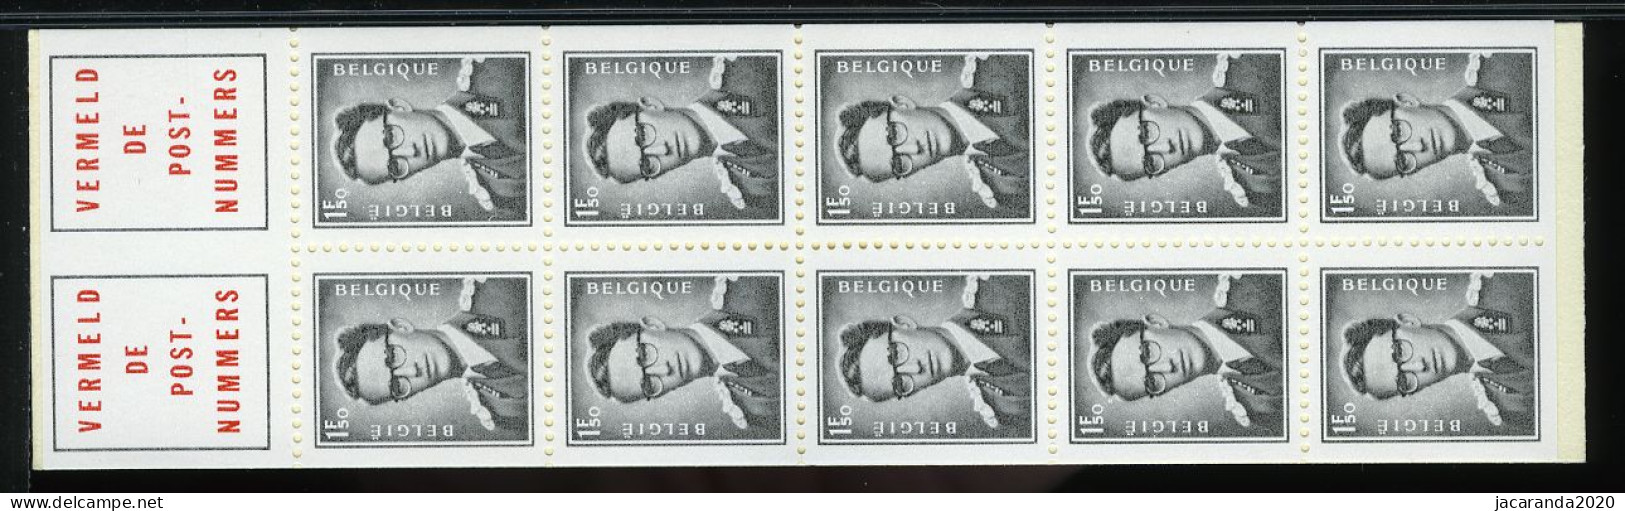 België B4 - Koning Boudewijn - Roi Baudouin - NL - 1970 - 1953-2006 Modernos [B]